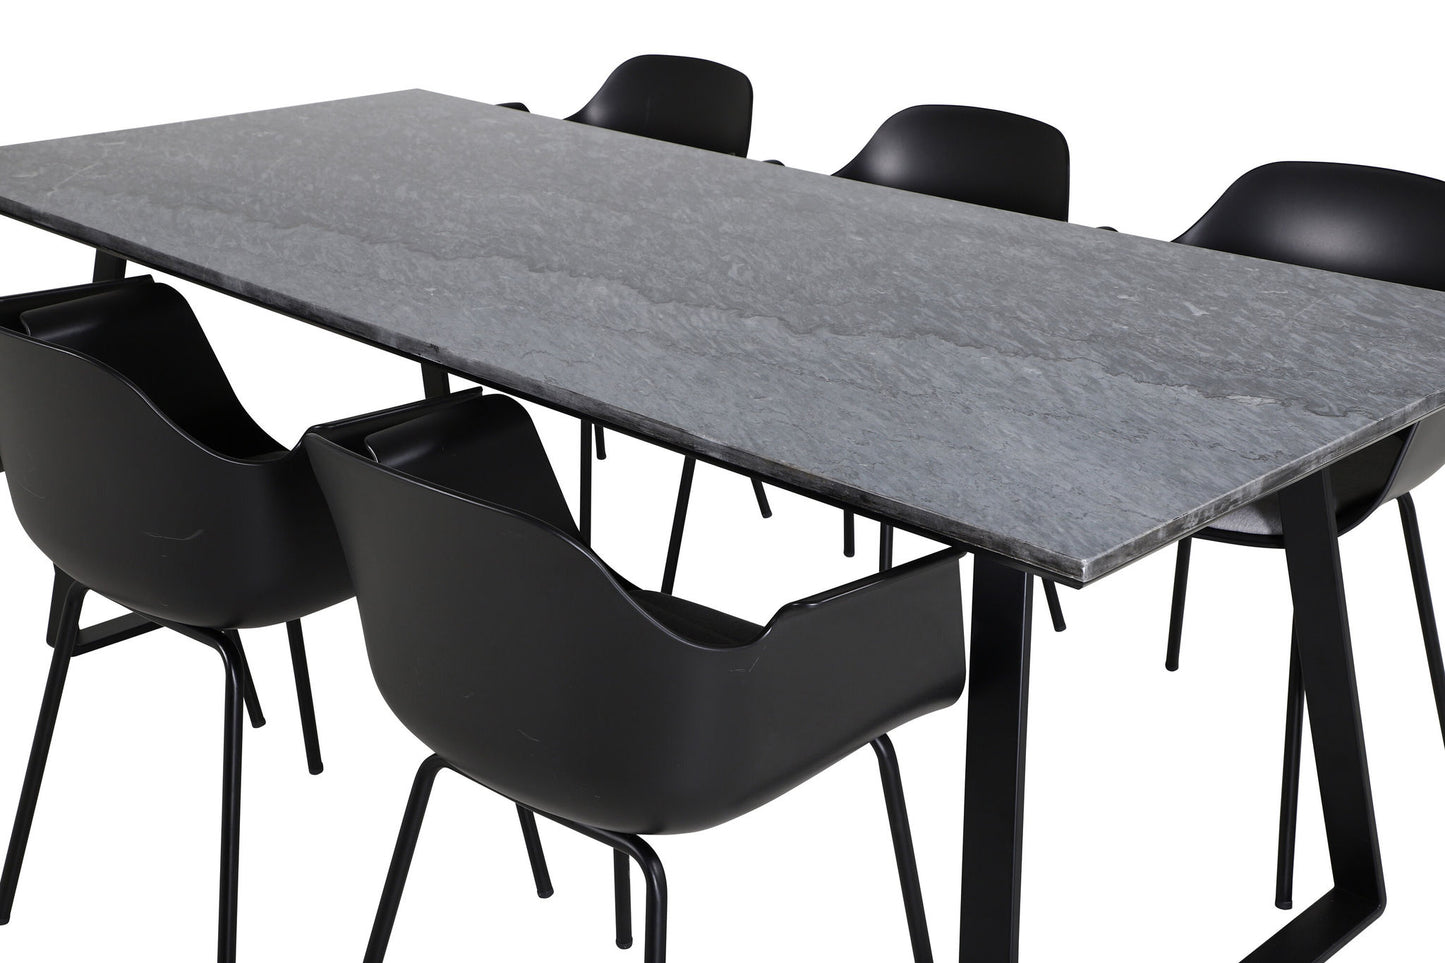 Estelle - Spisebord, 200*90*H76 - Sort+Comfort Plast Spisebordsstol - Sorte ben - Sort Plast